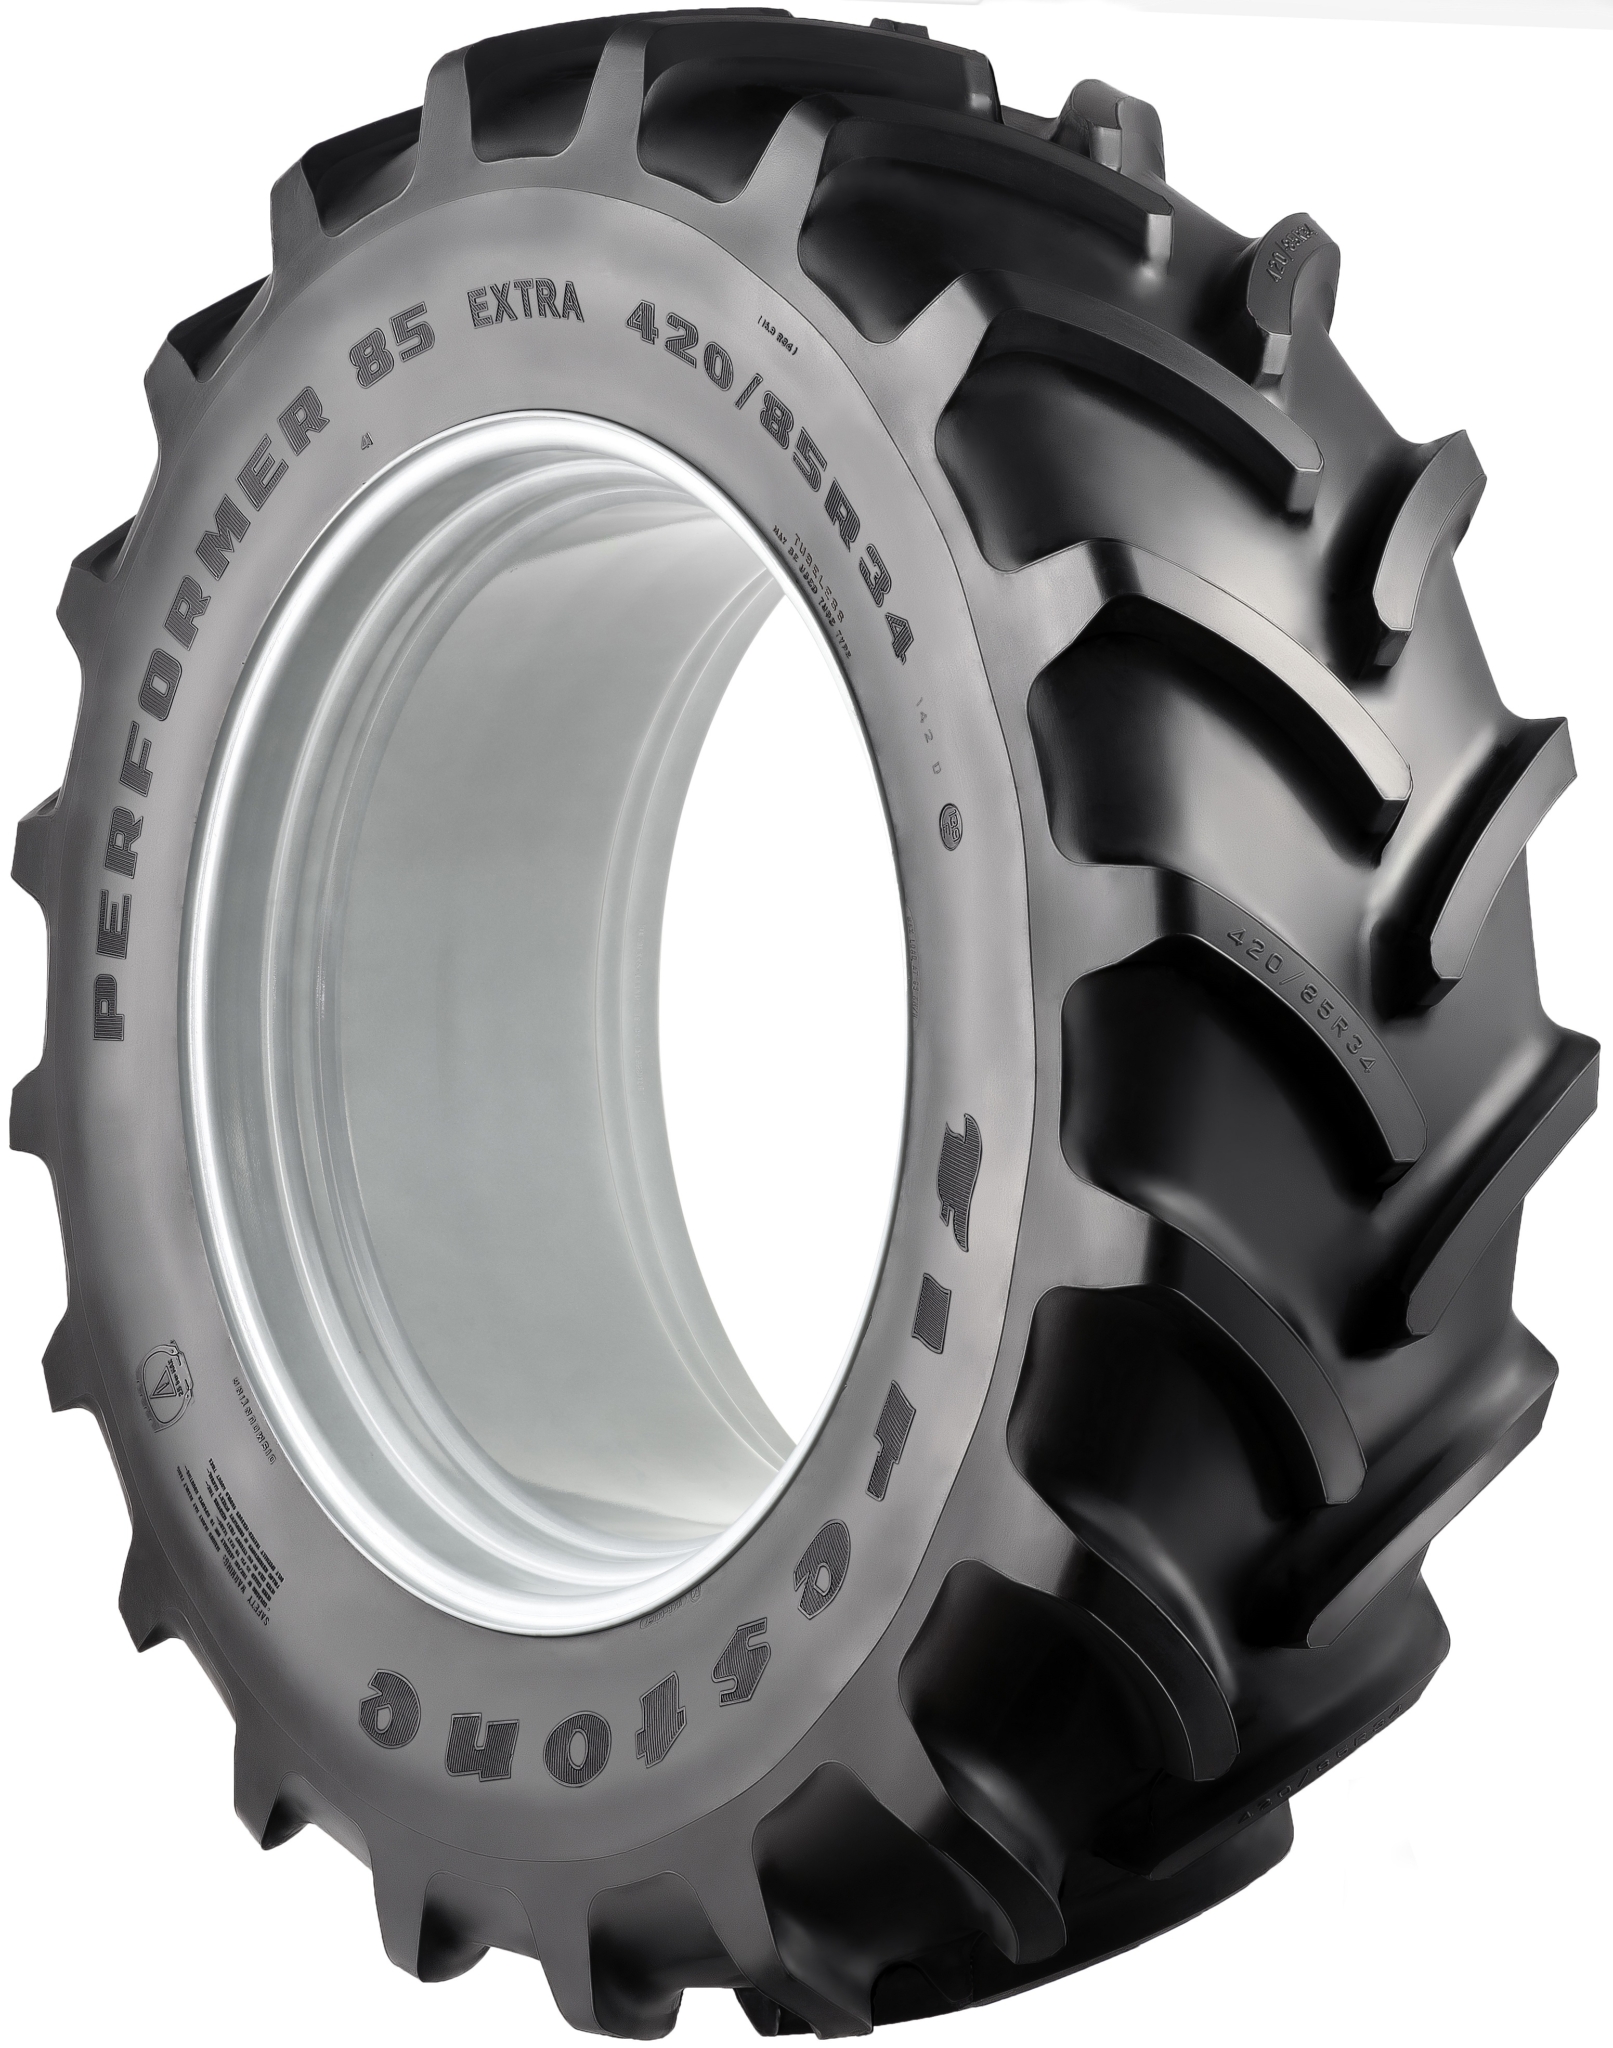 New Firestone Performer Extra farm tyre offers ‘20% longer tyre life’